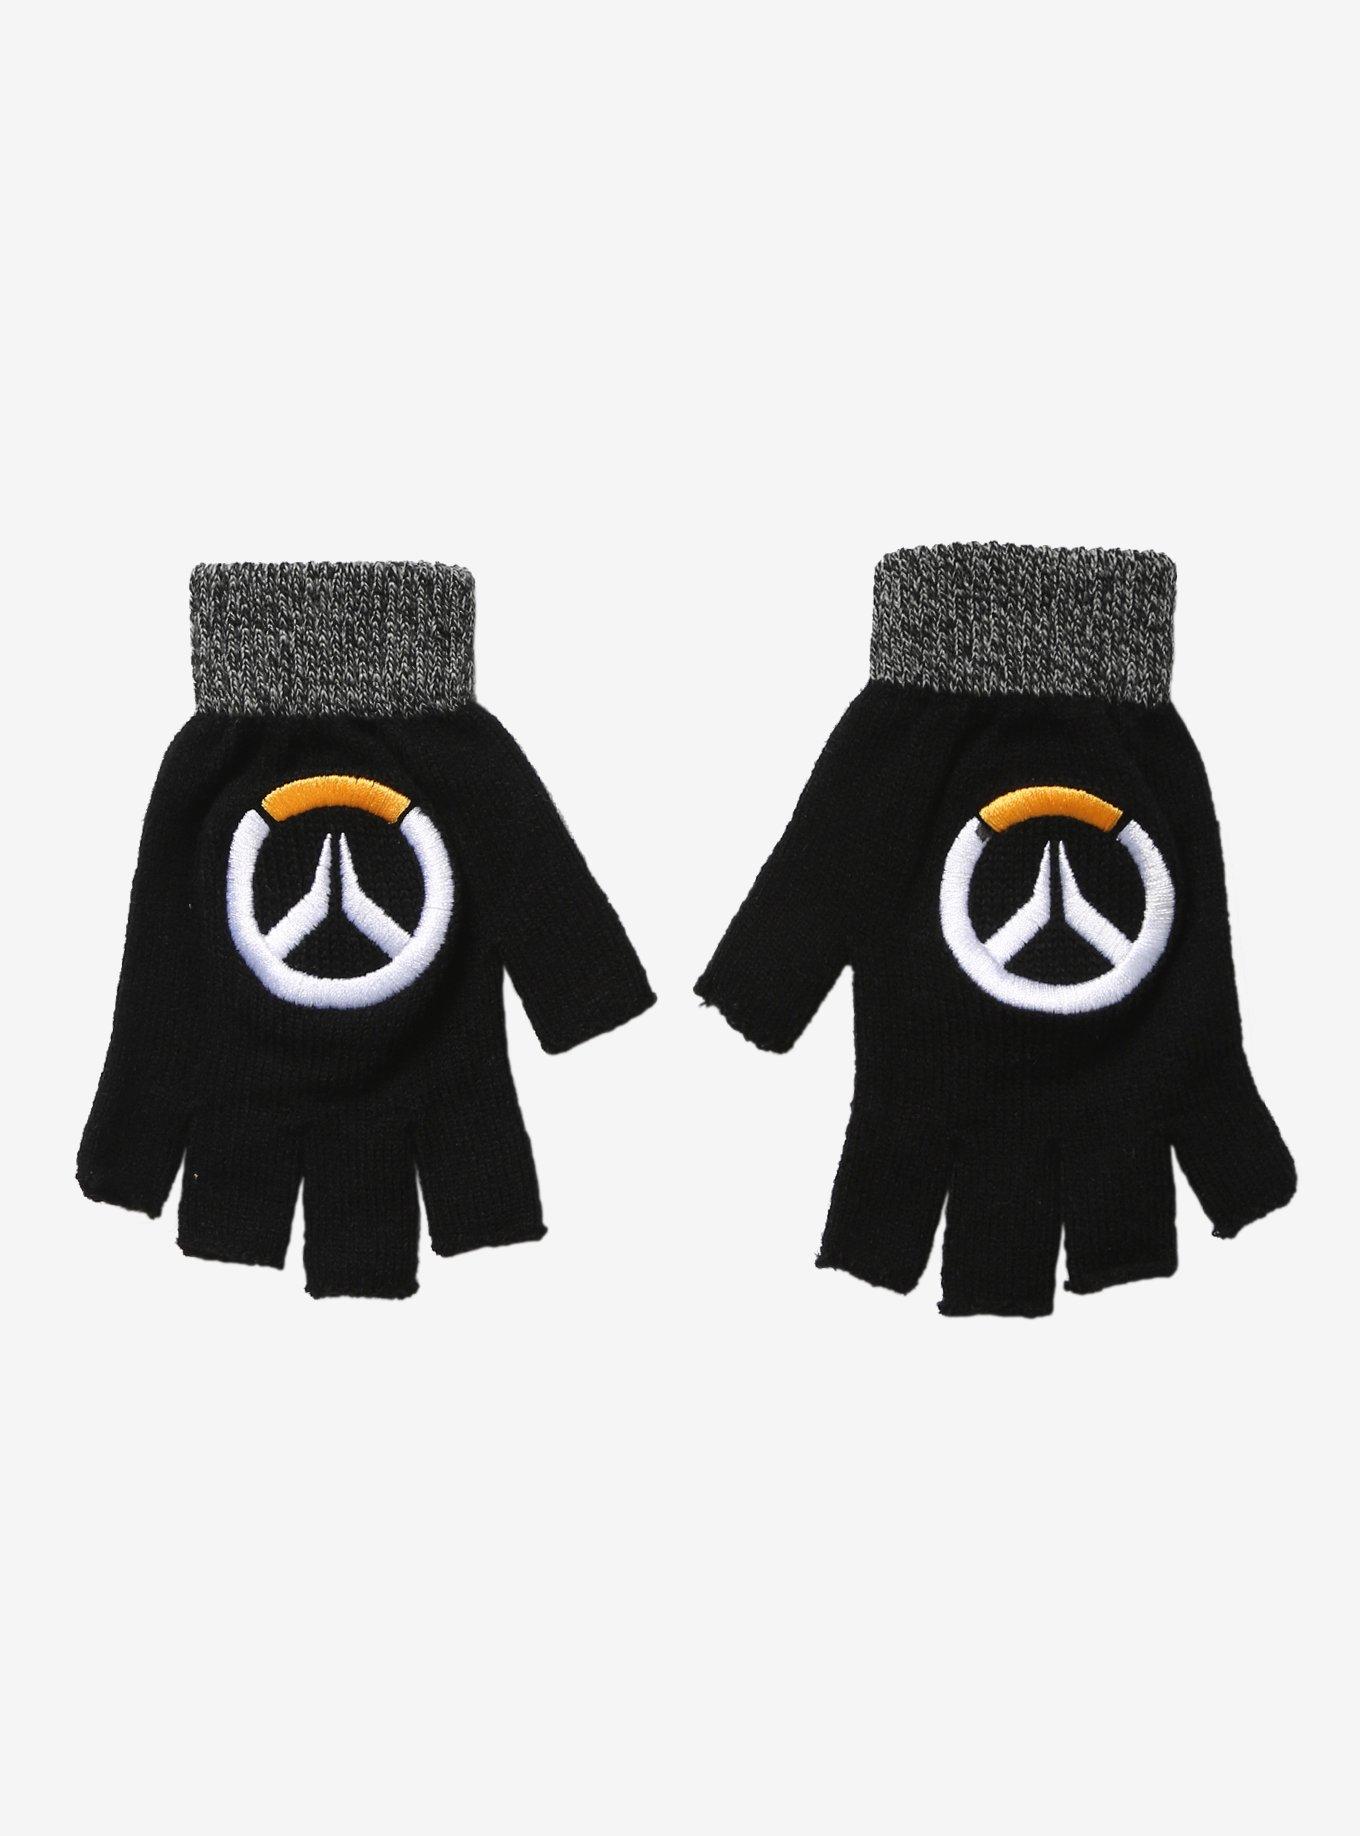 Overwatch Fingerless Gloves, , hi-res